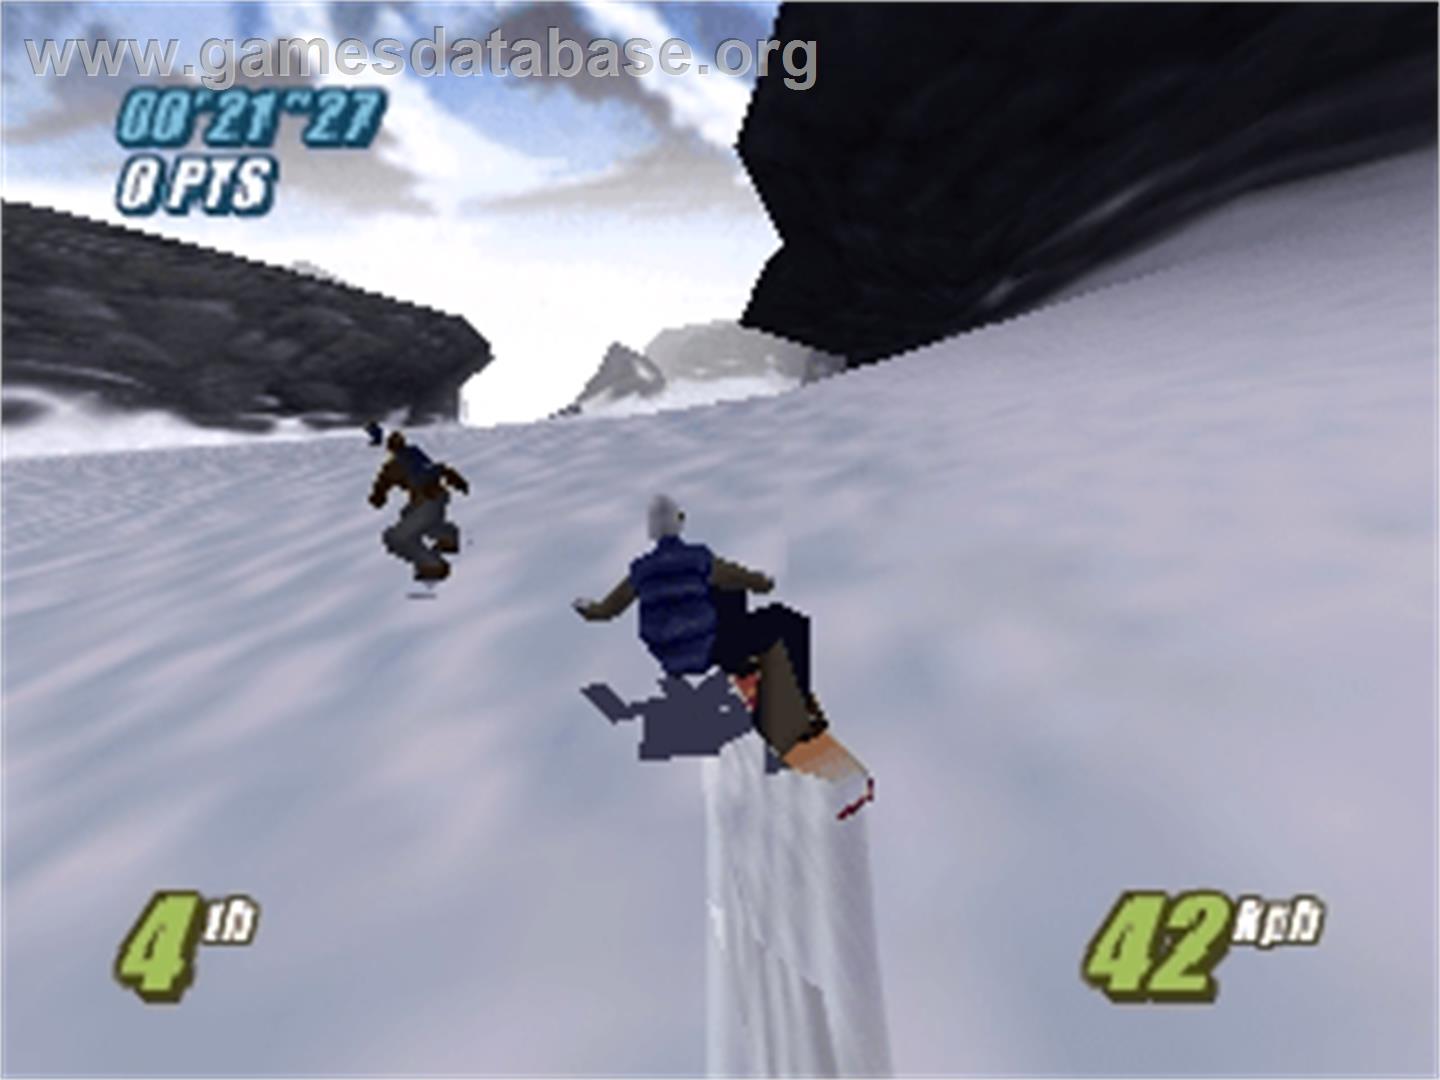 Twisted Edge: Extreme Snowboarding - Nintendo N64 - Artwork - In Game